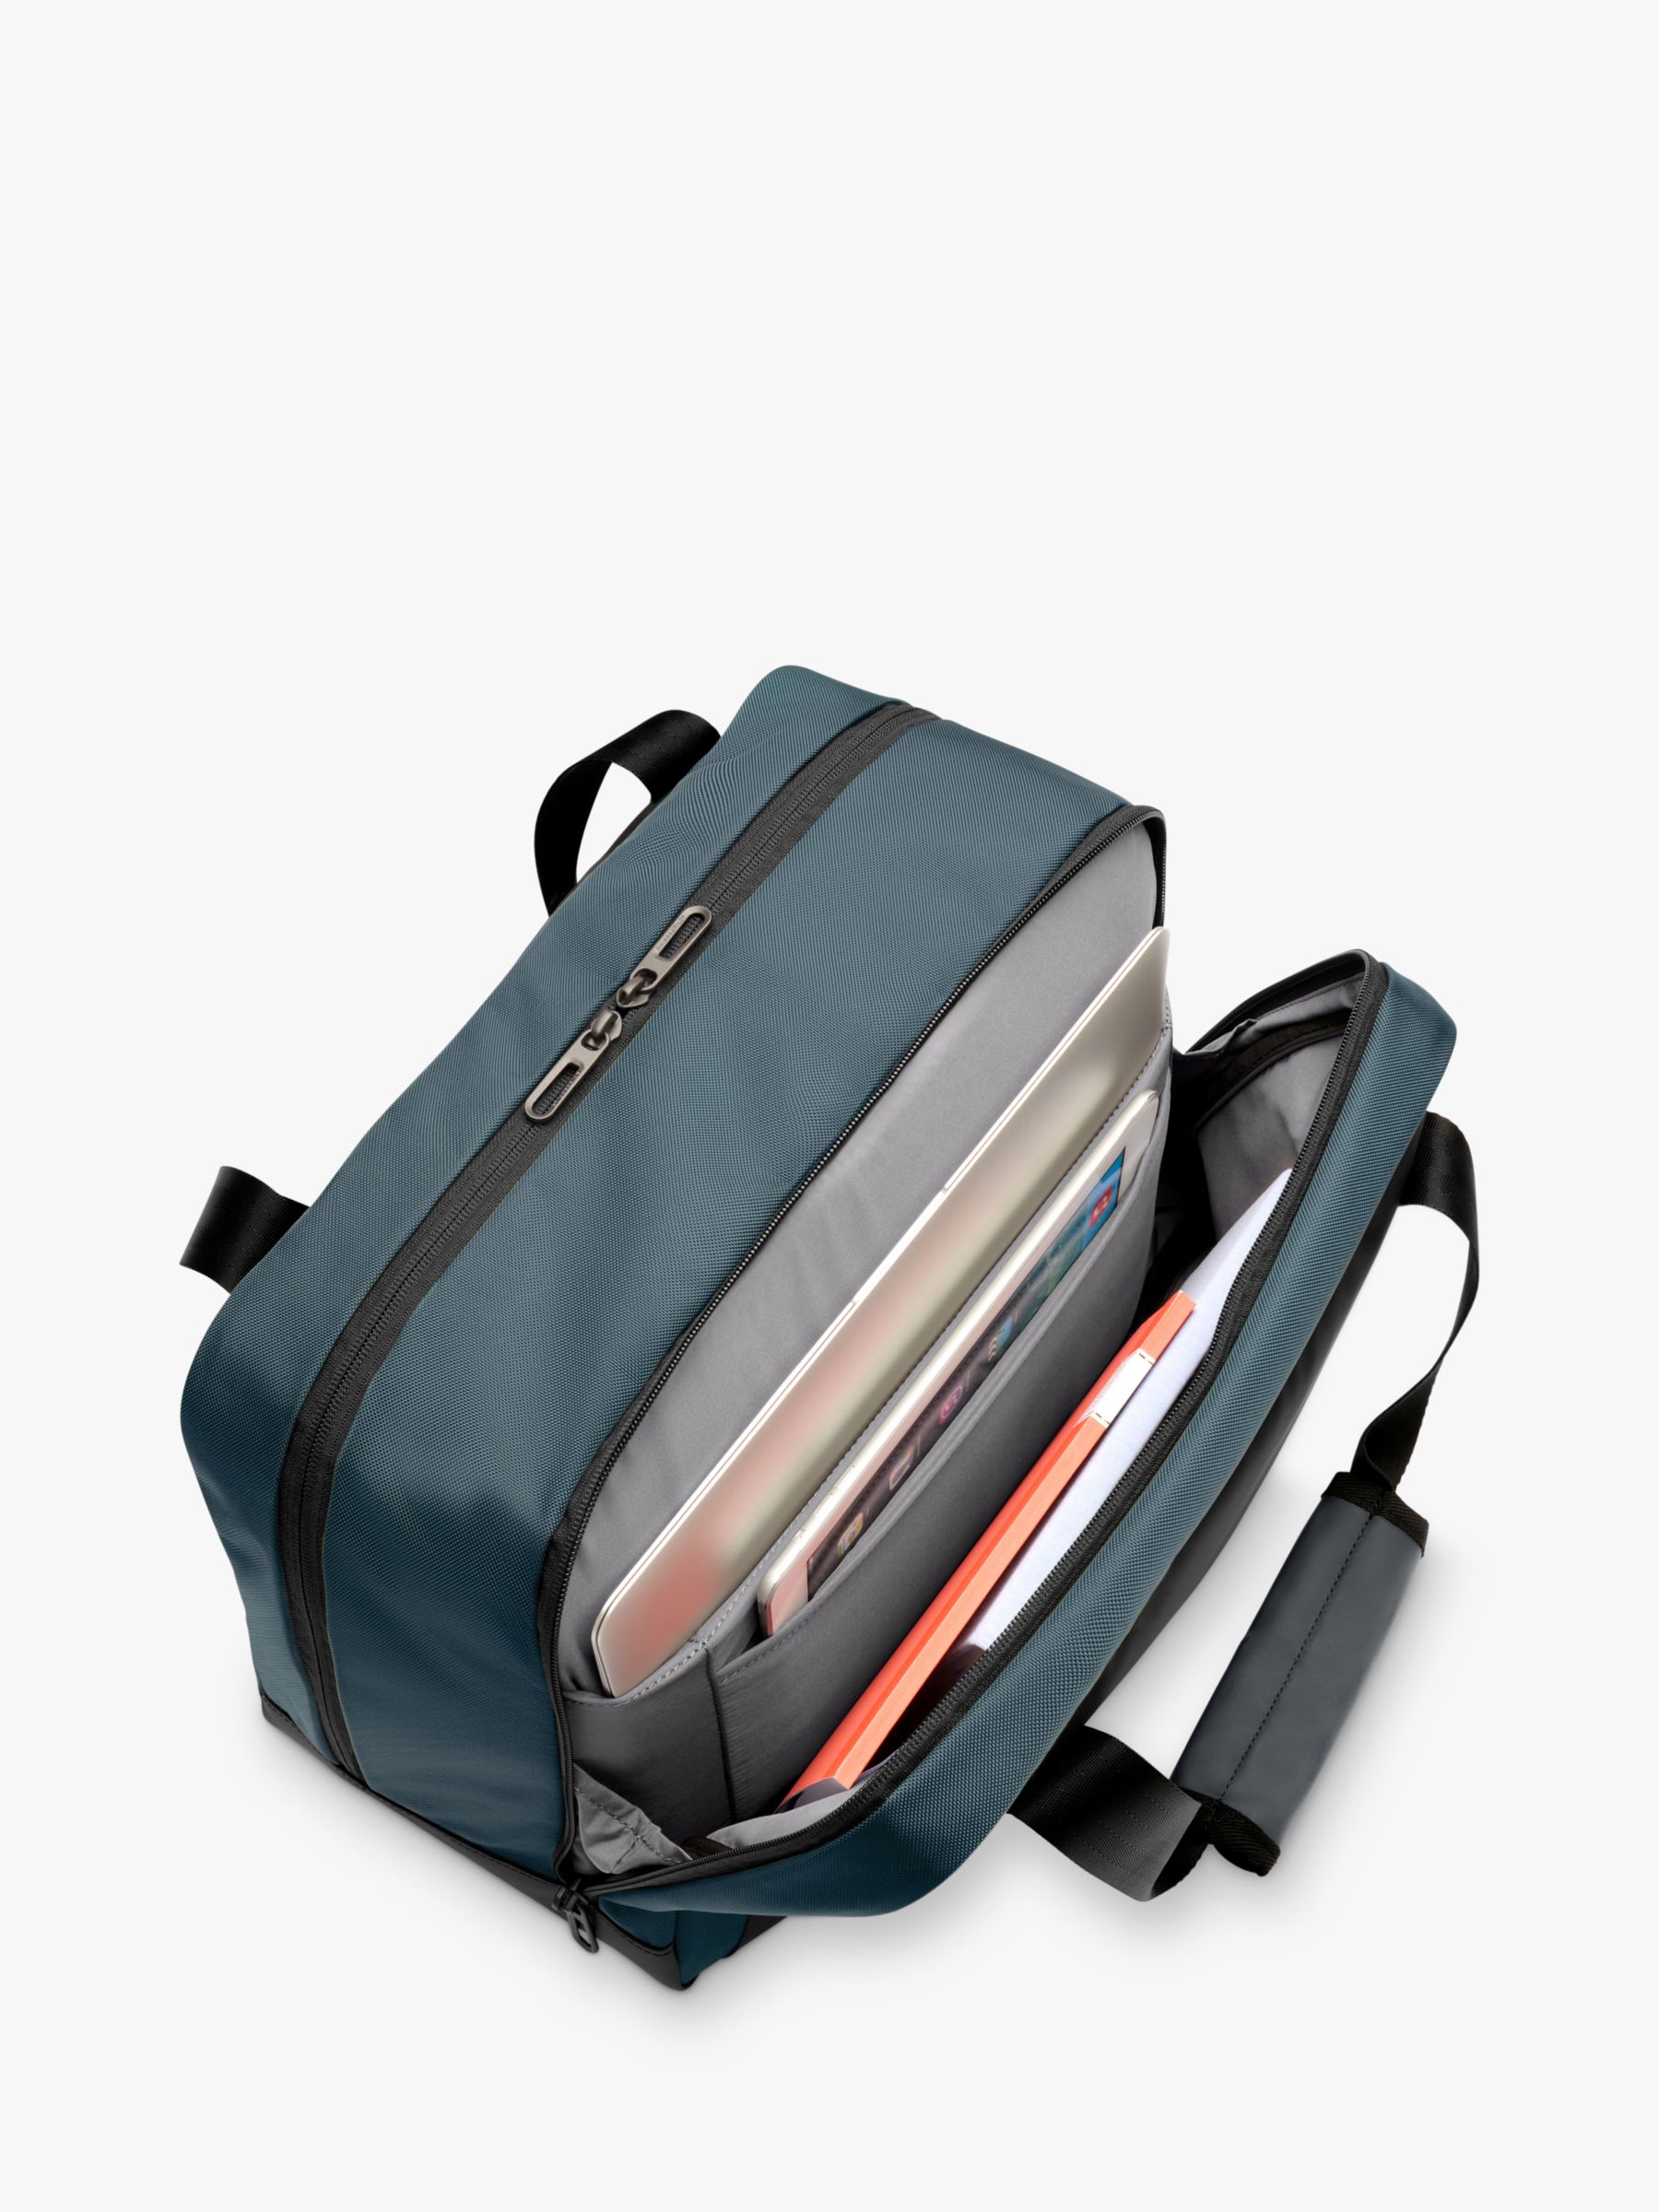 Buy Briggs & Riley ZDX Underseat Cabin Bag Online at johnlewis.com